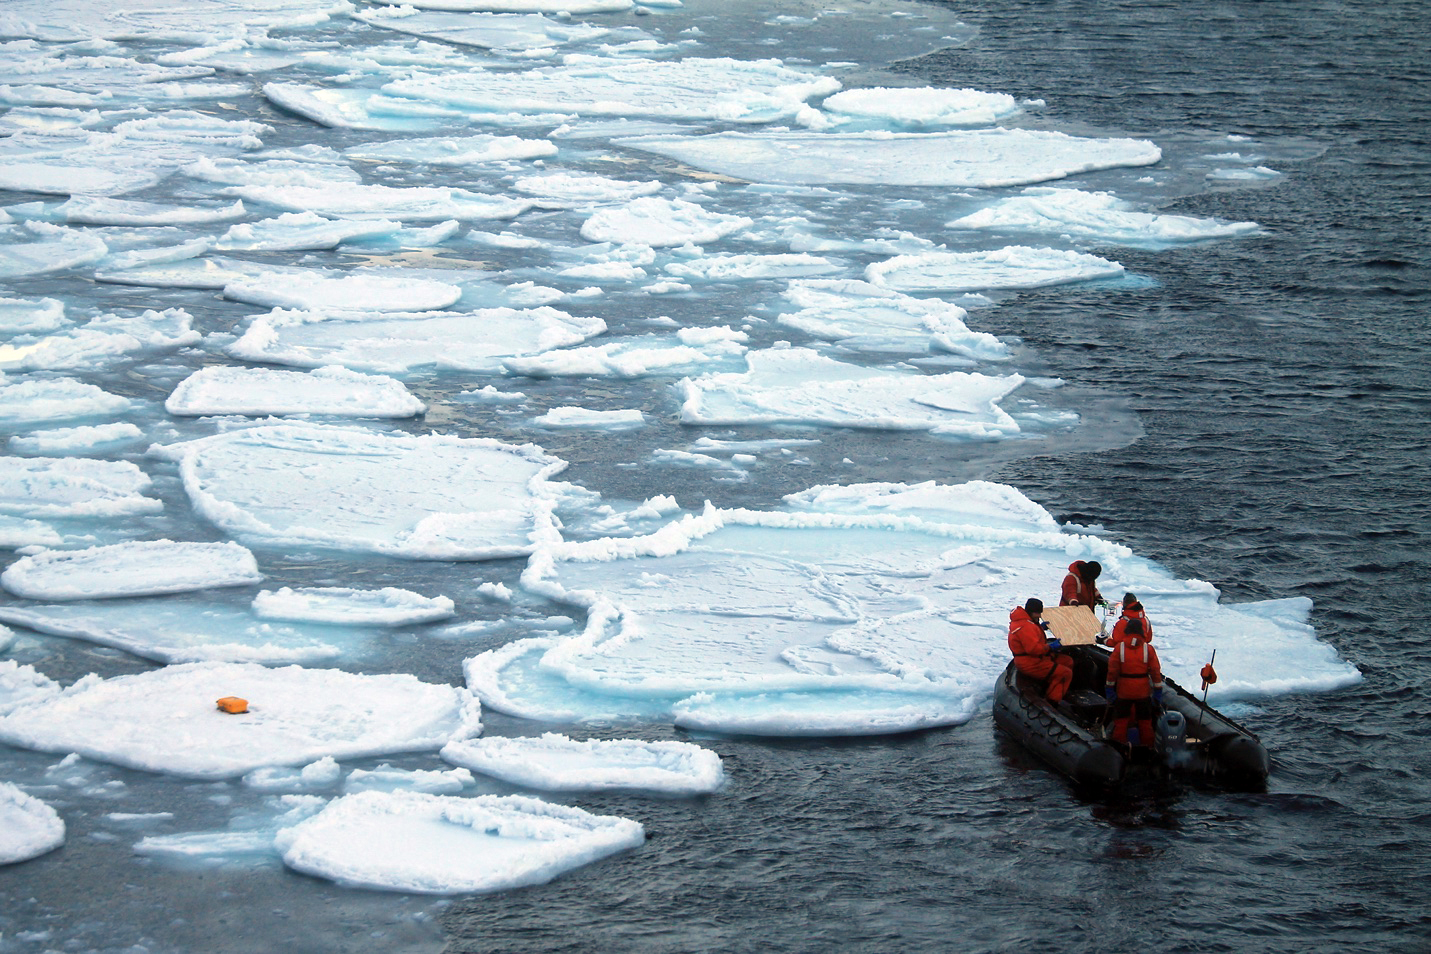 Pancake ice in the Antarctic. Photo credit: Madison Smith